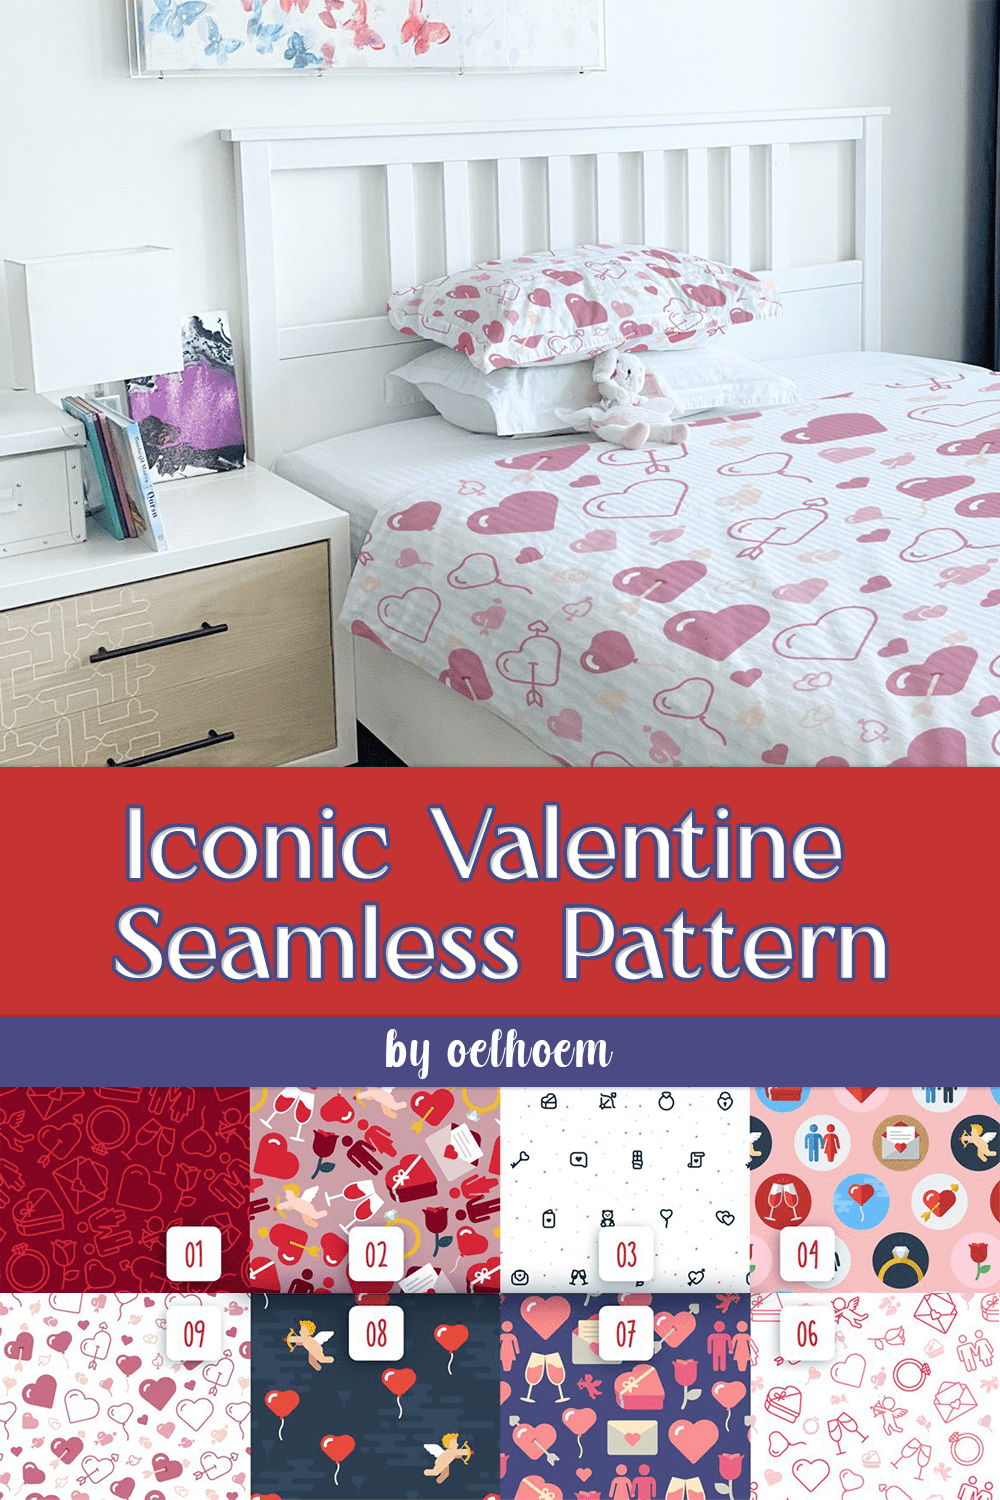 Iconic Valentine Seamless Pattern - Pinterest.